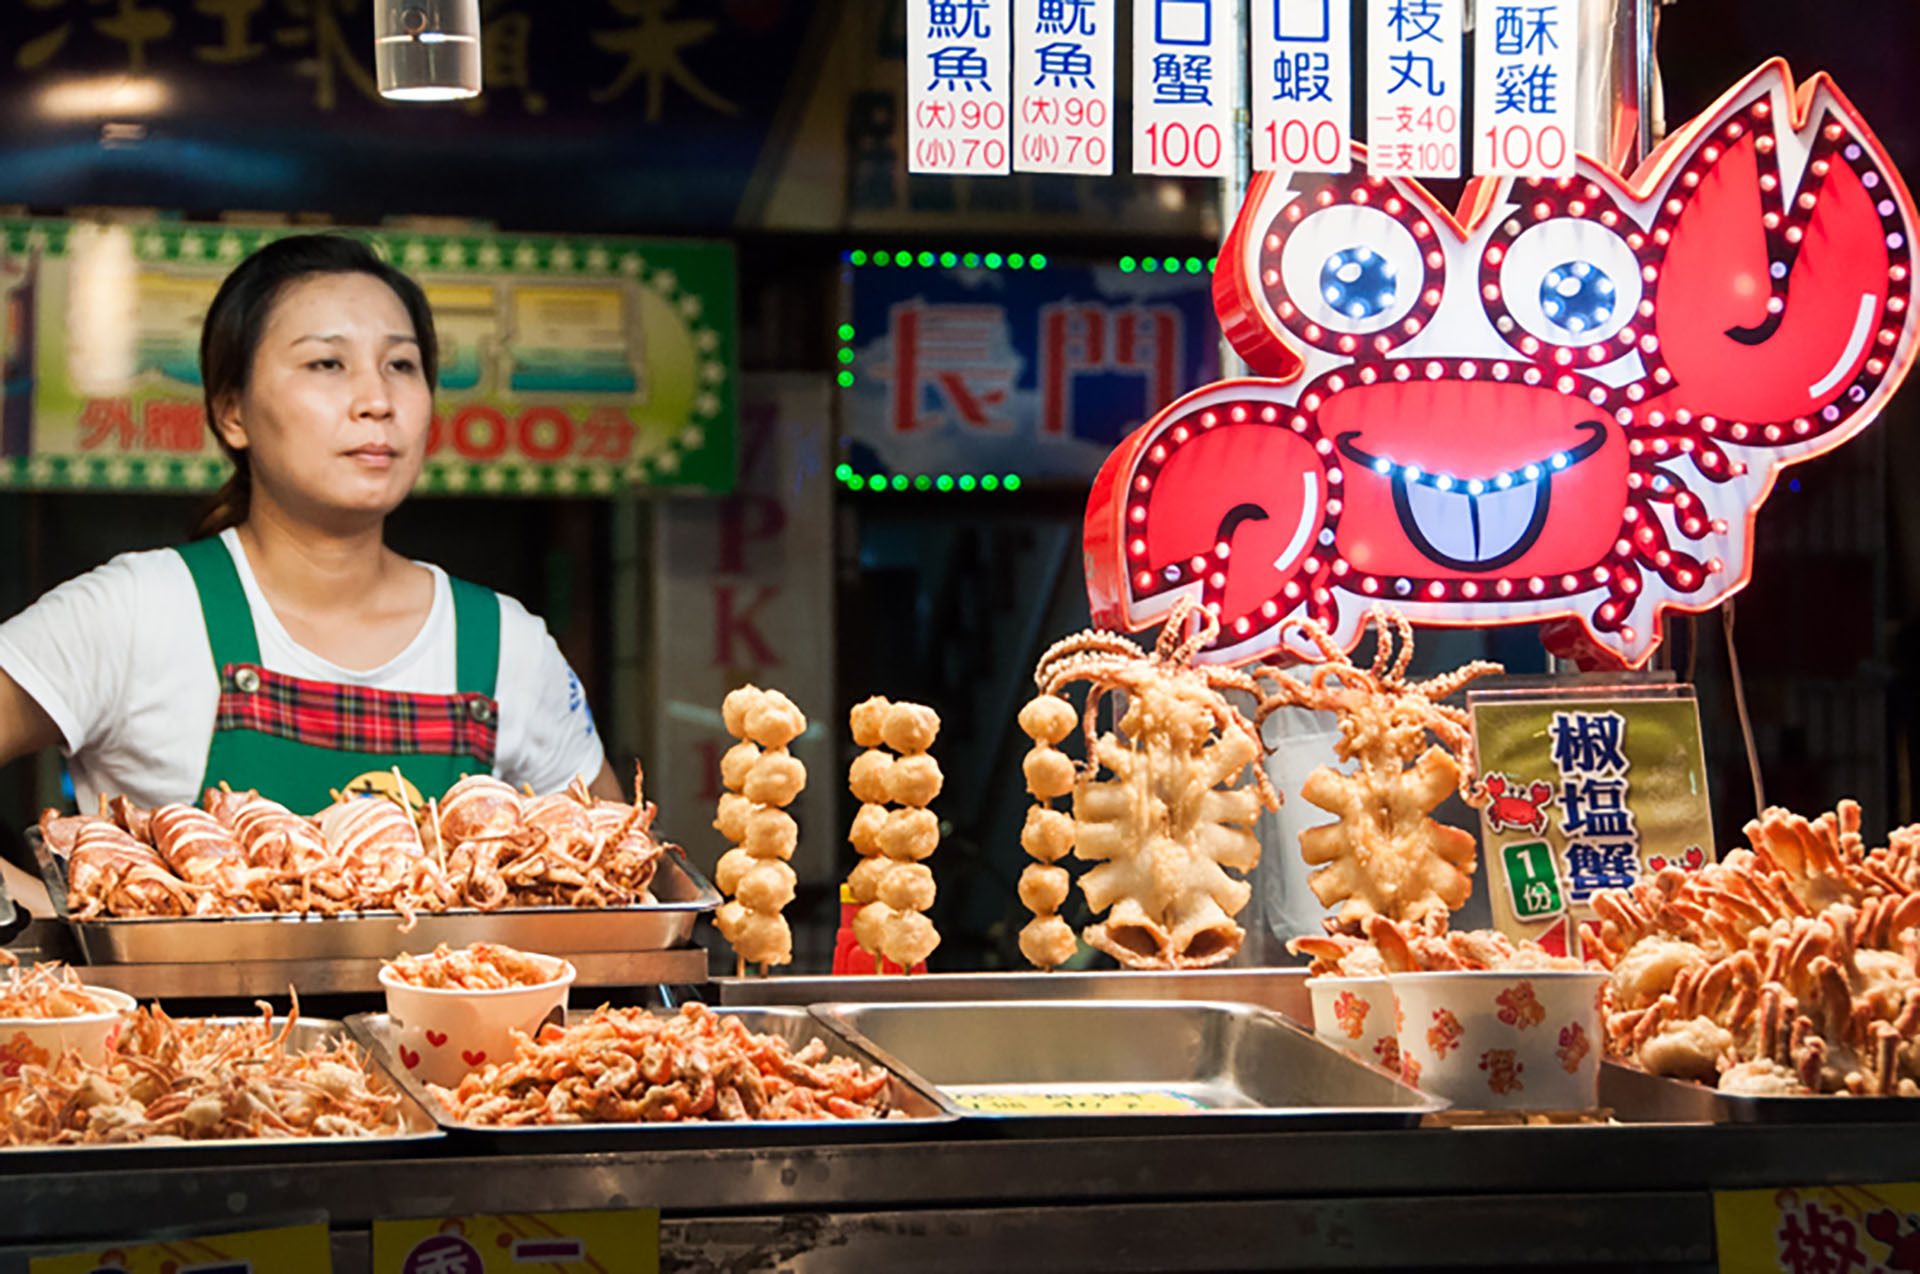 Taipei Eats Food Tour Review